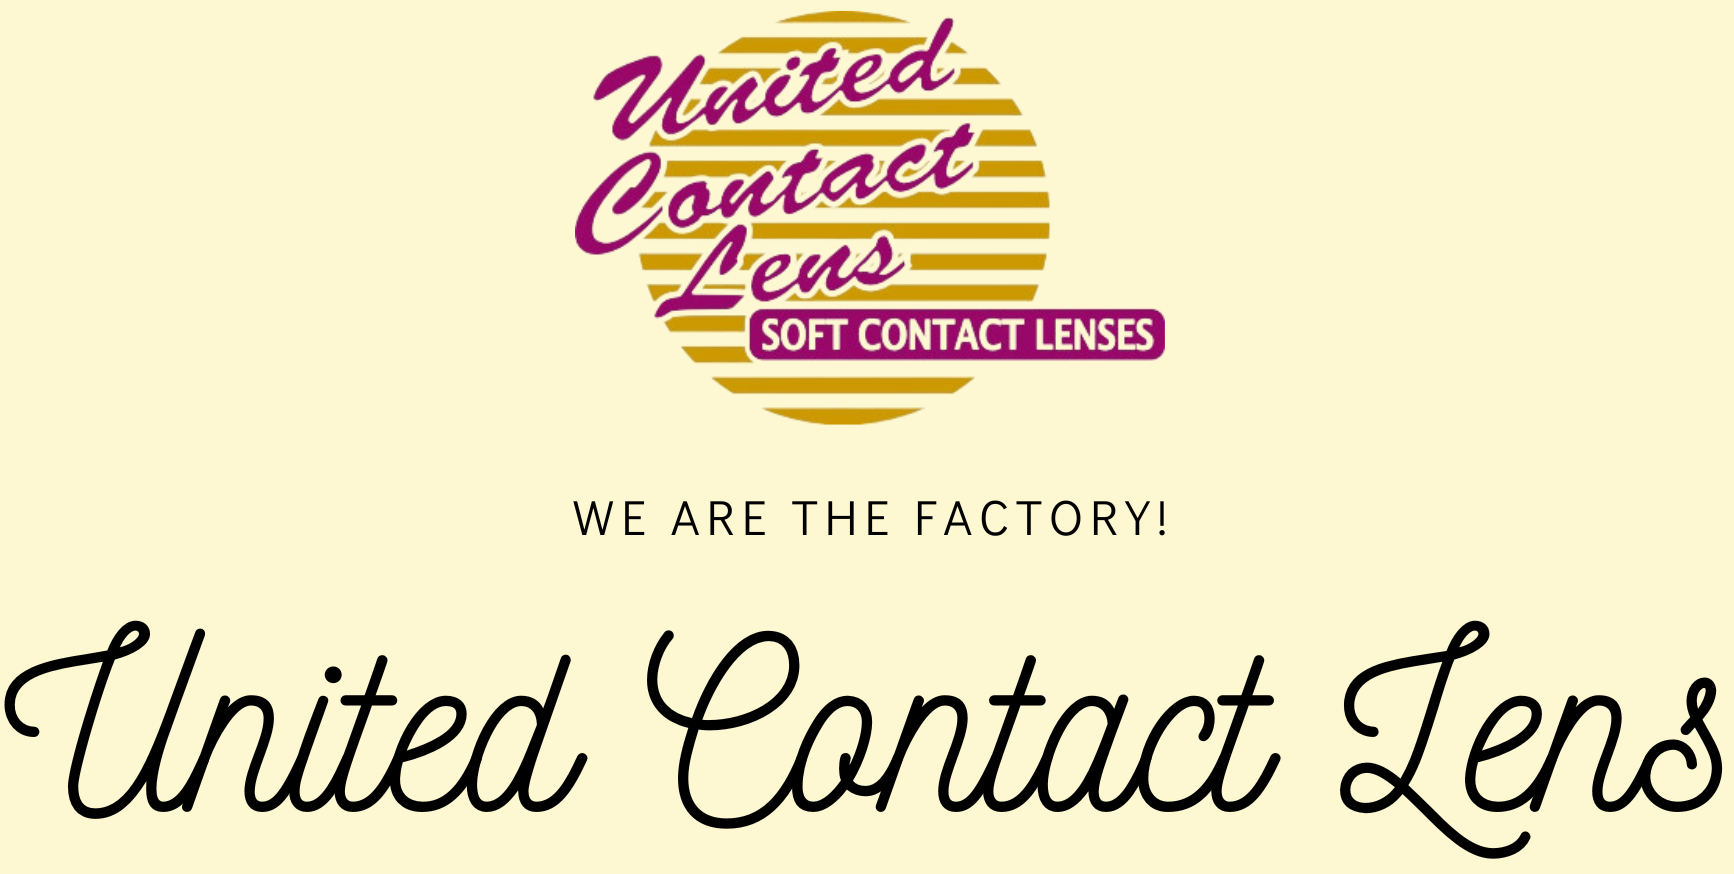 United Contact Lens Inc.